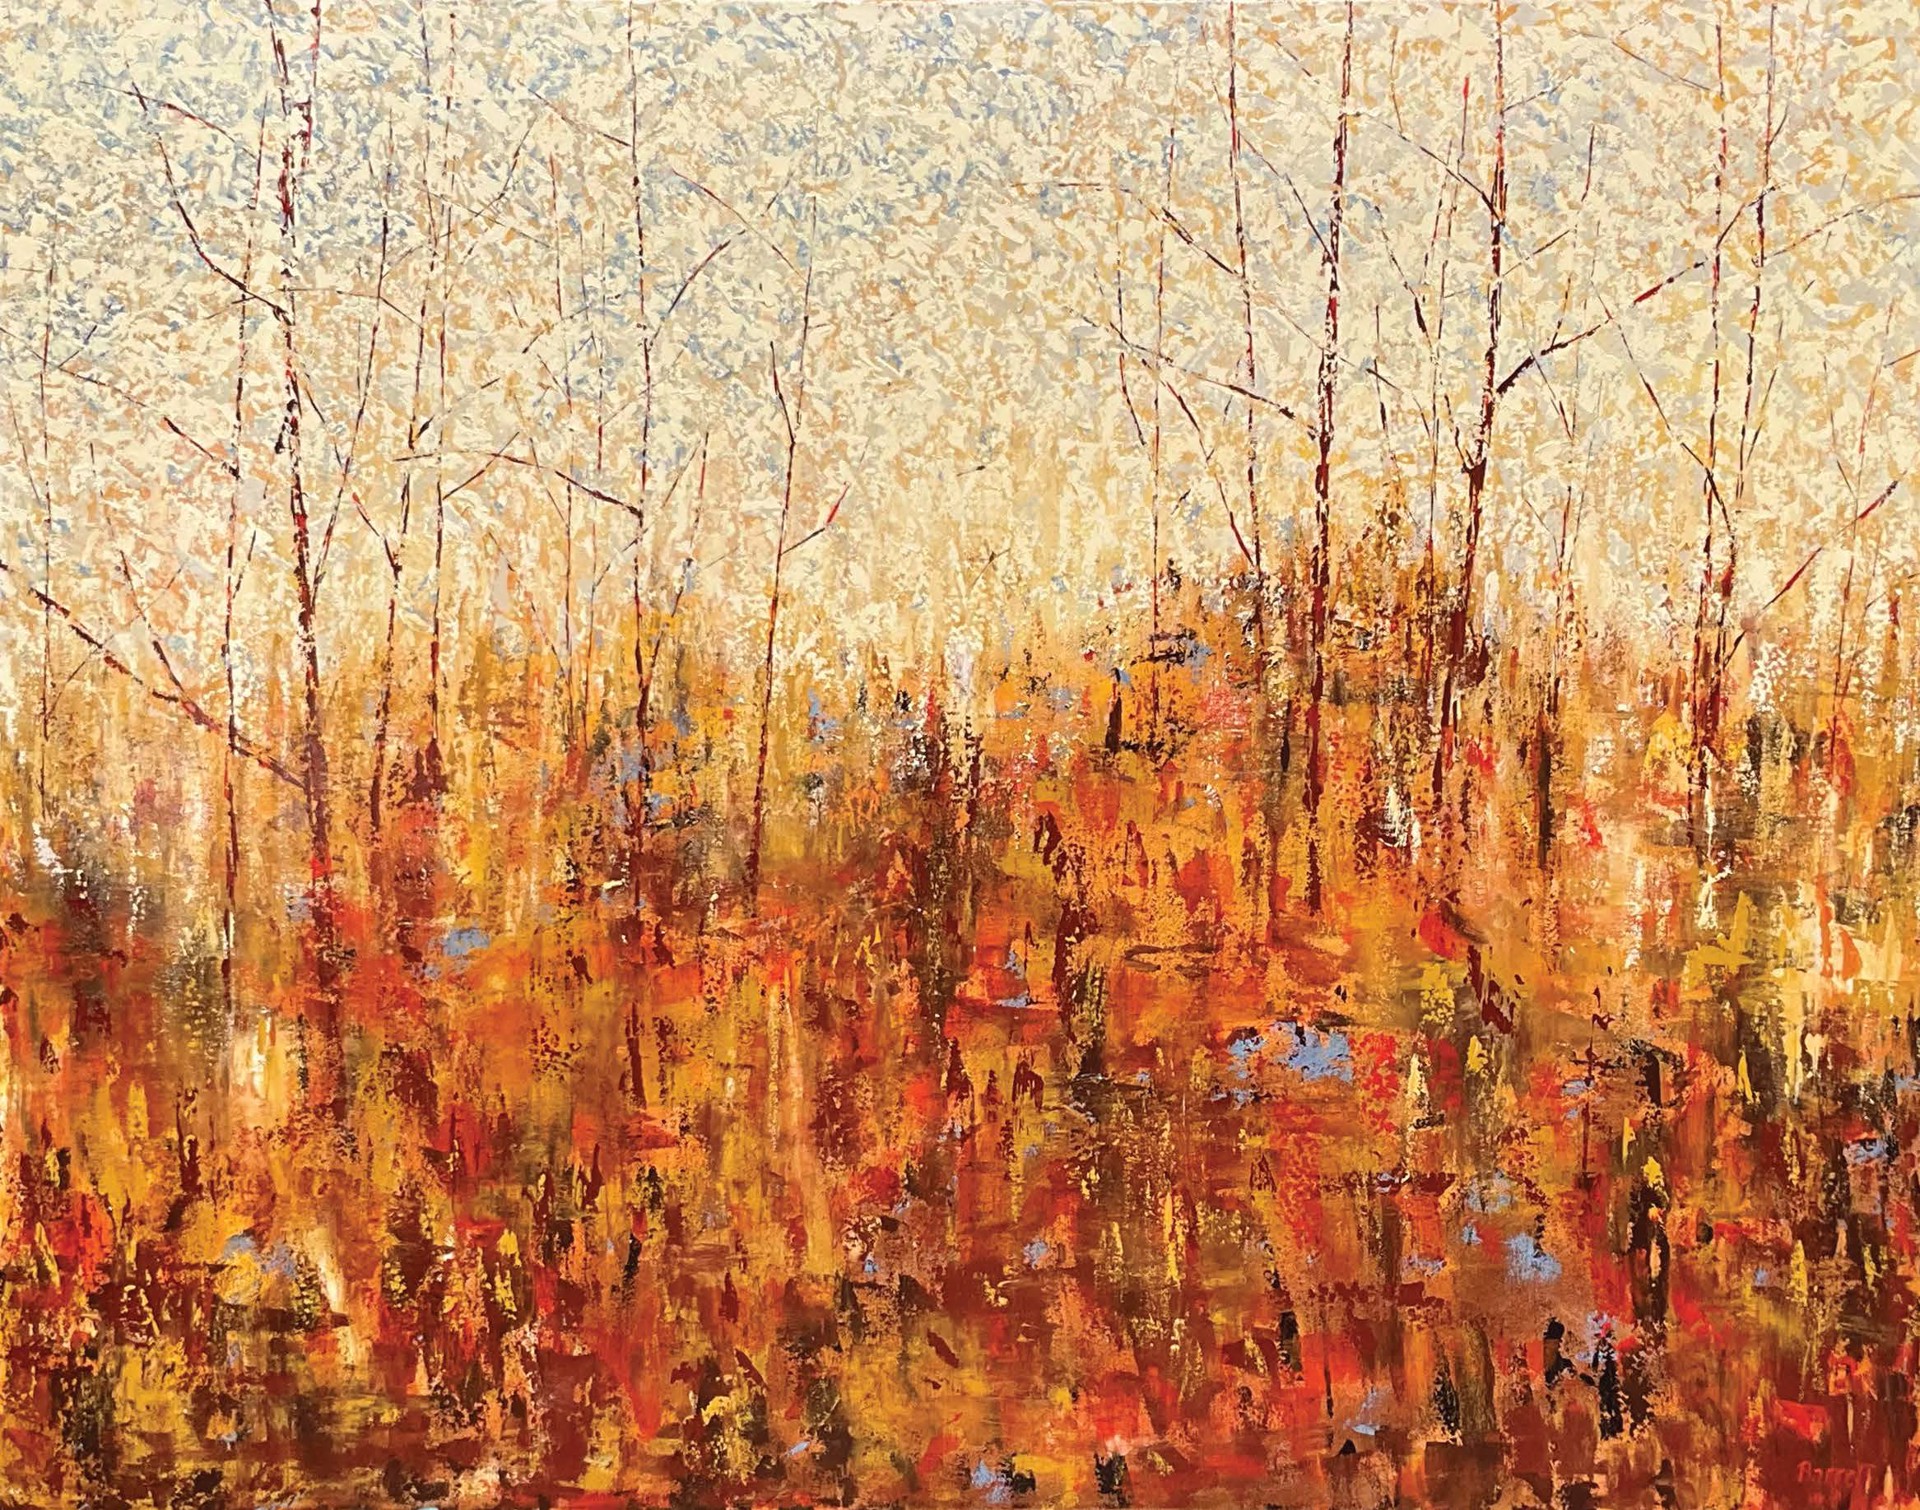 Autumn Glory by Barrett Edwards